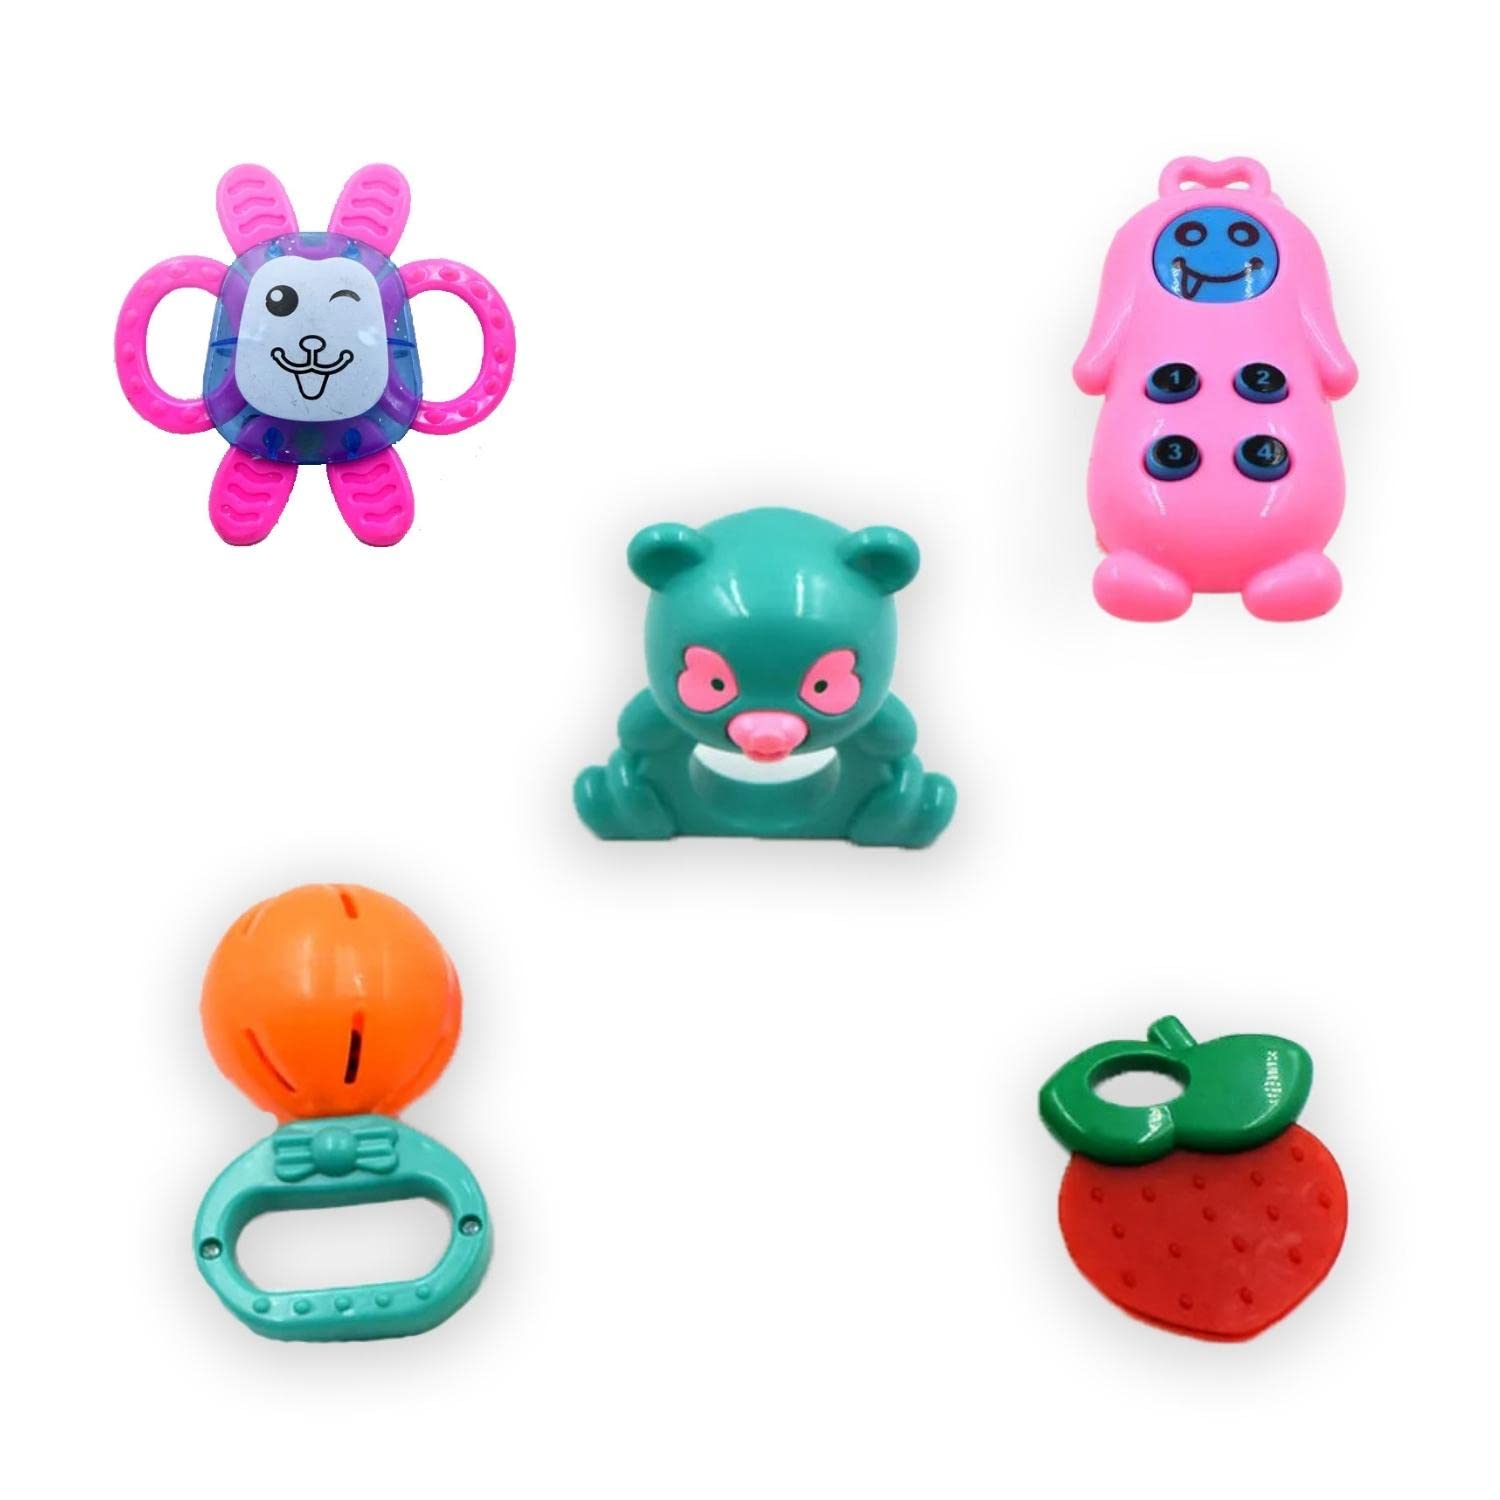 Kids Mandi non-toxic plastic baby rattle teether toys set.